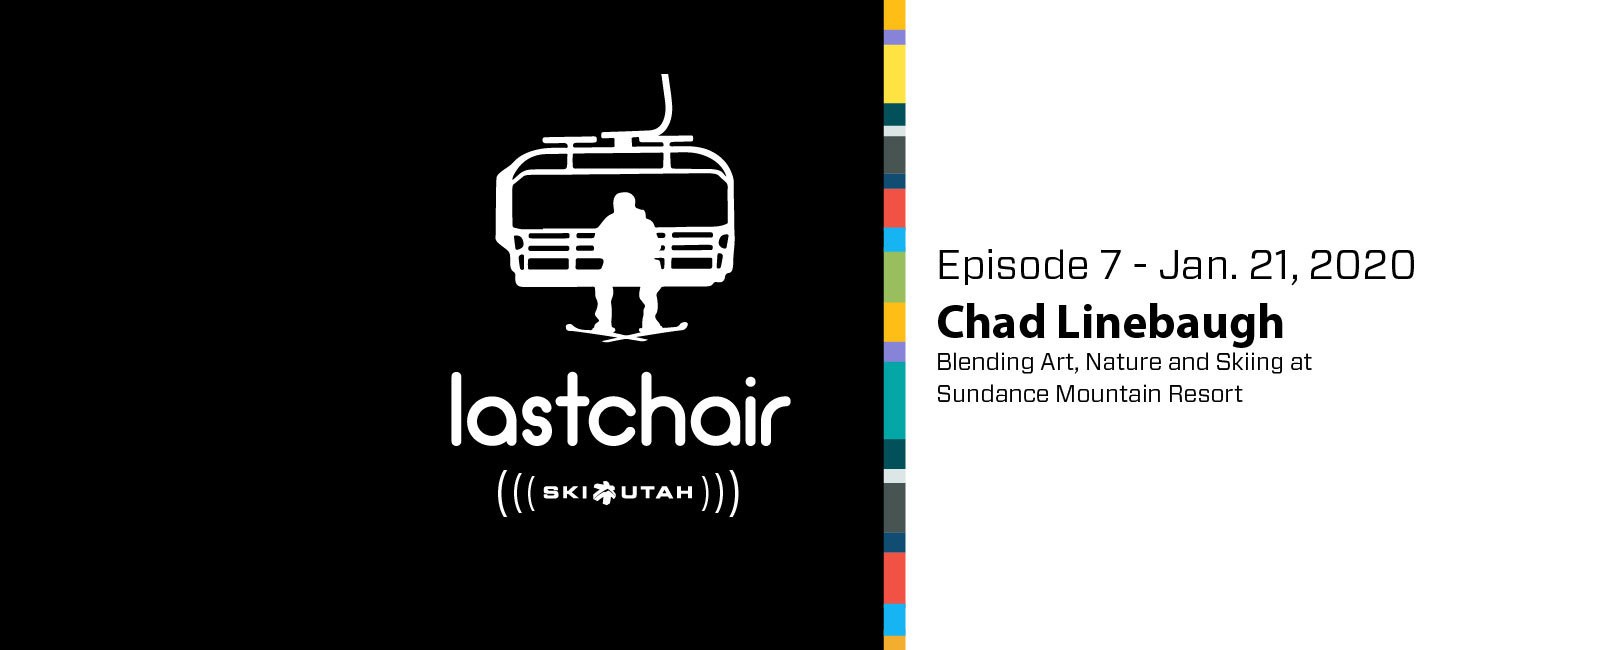 Chad Linebaugh: Blending Art, Nature and Skiing at Sundance Mountain Resort